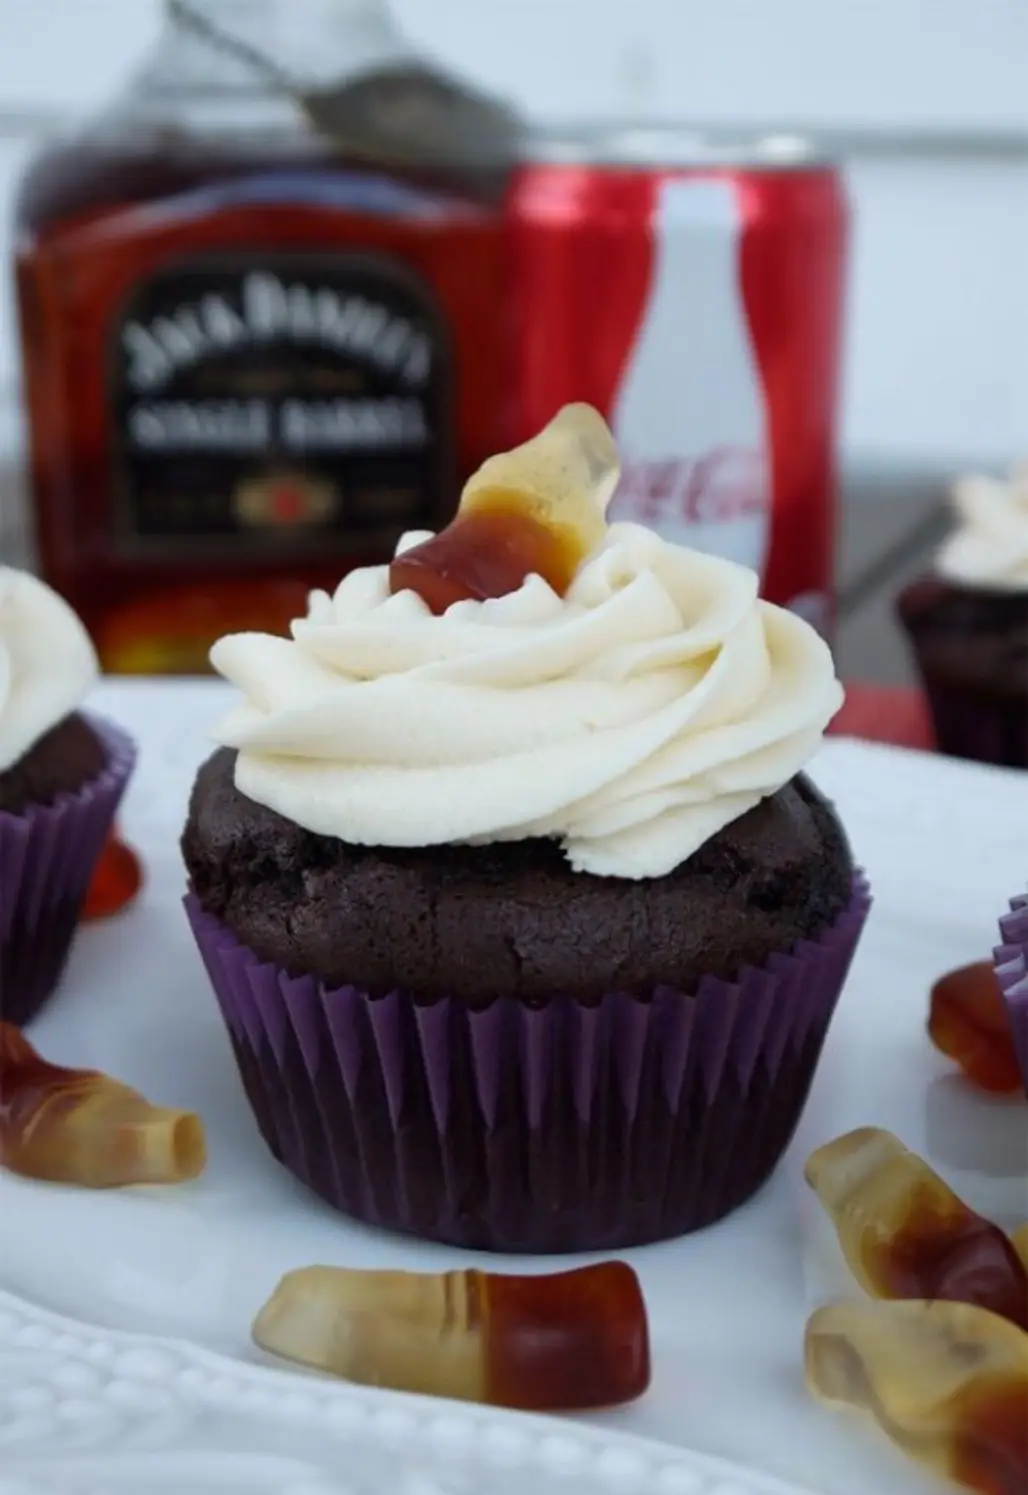 Jack Daniel's, food, cupcake, dessert, cake,